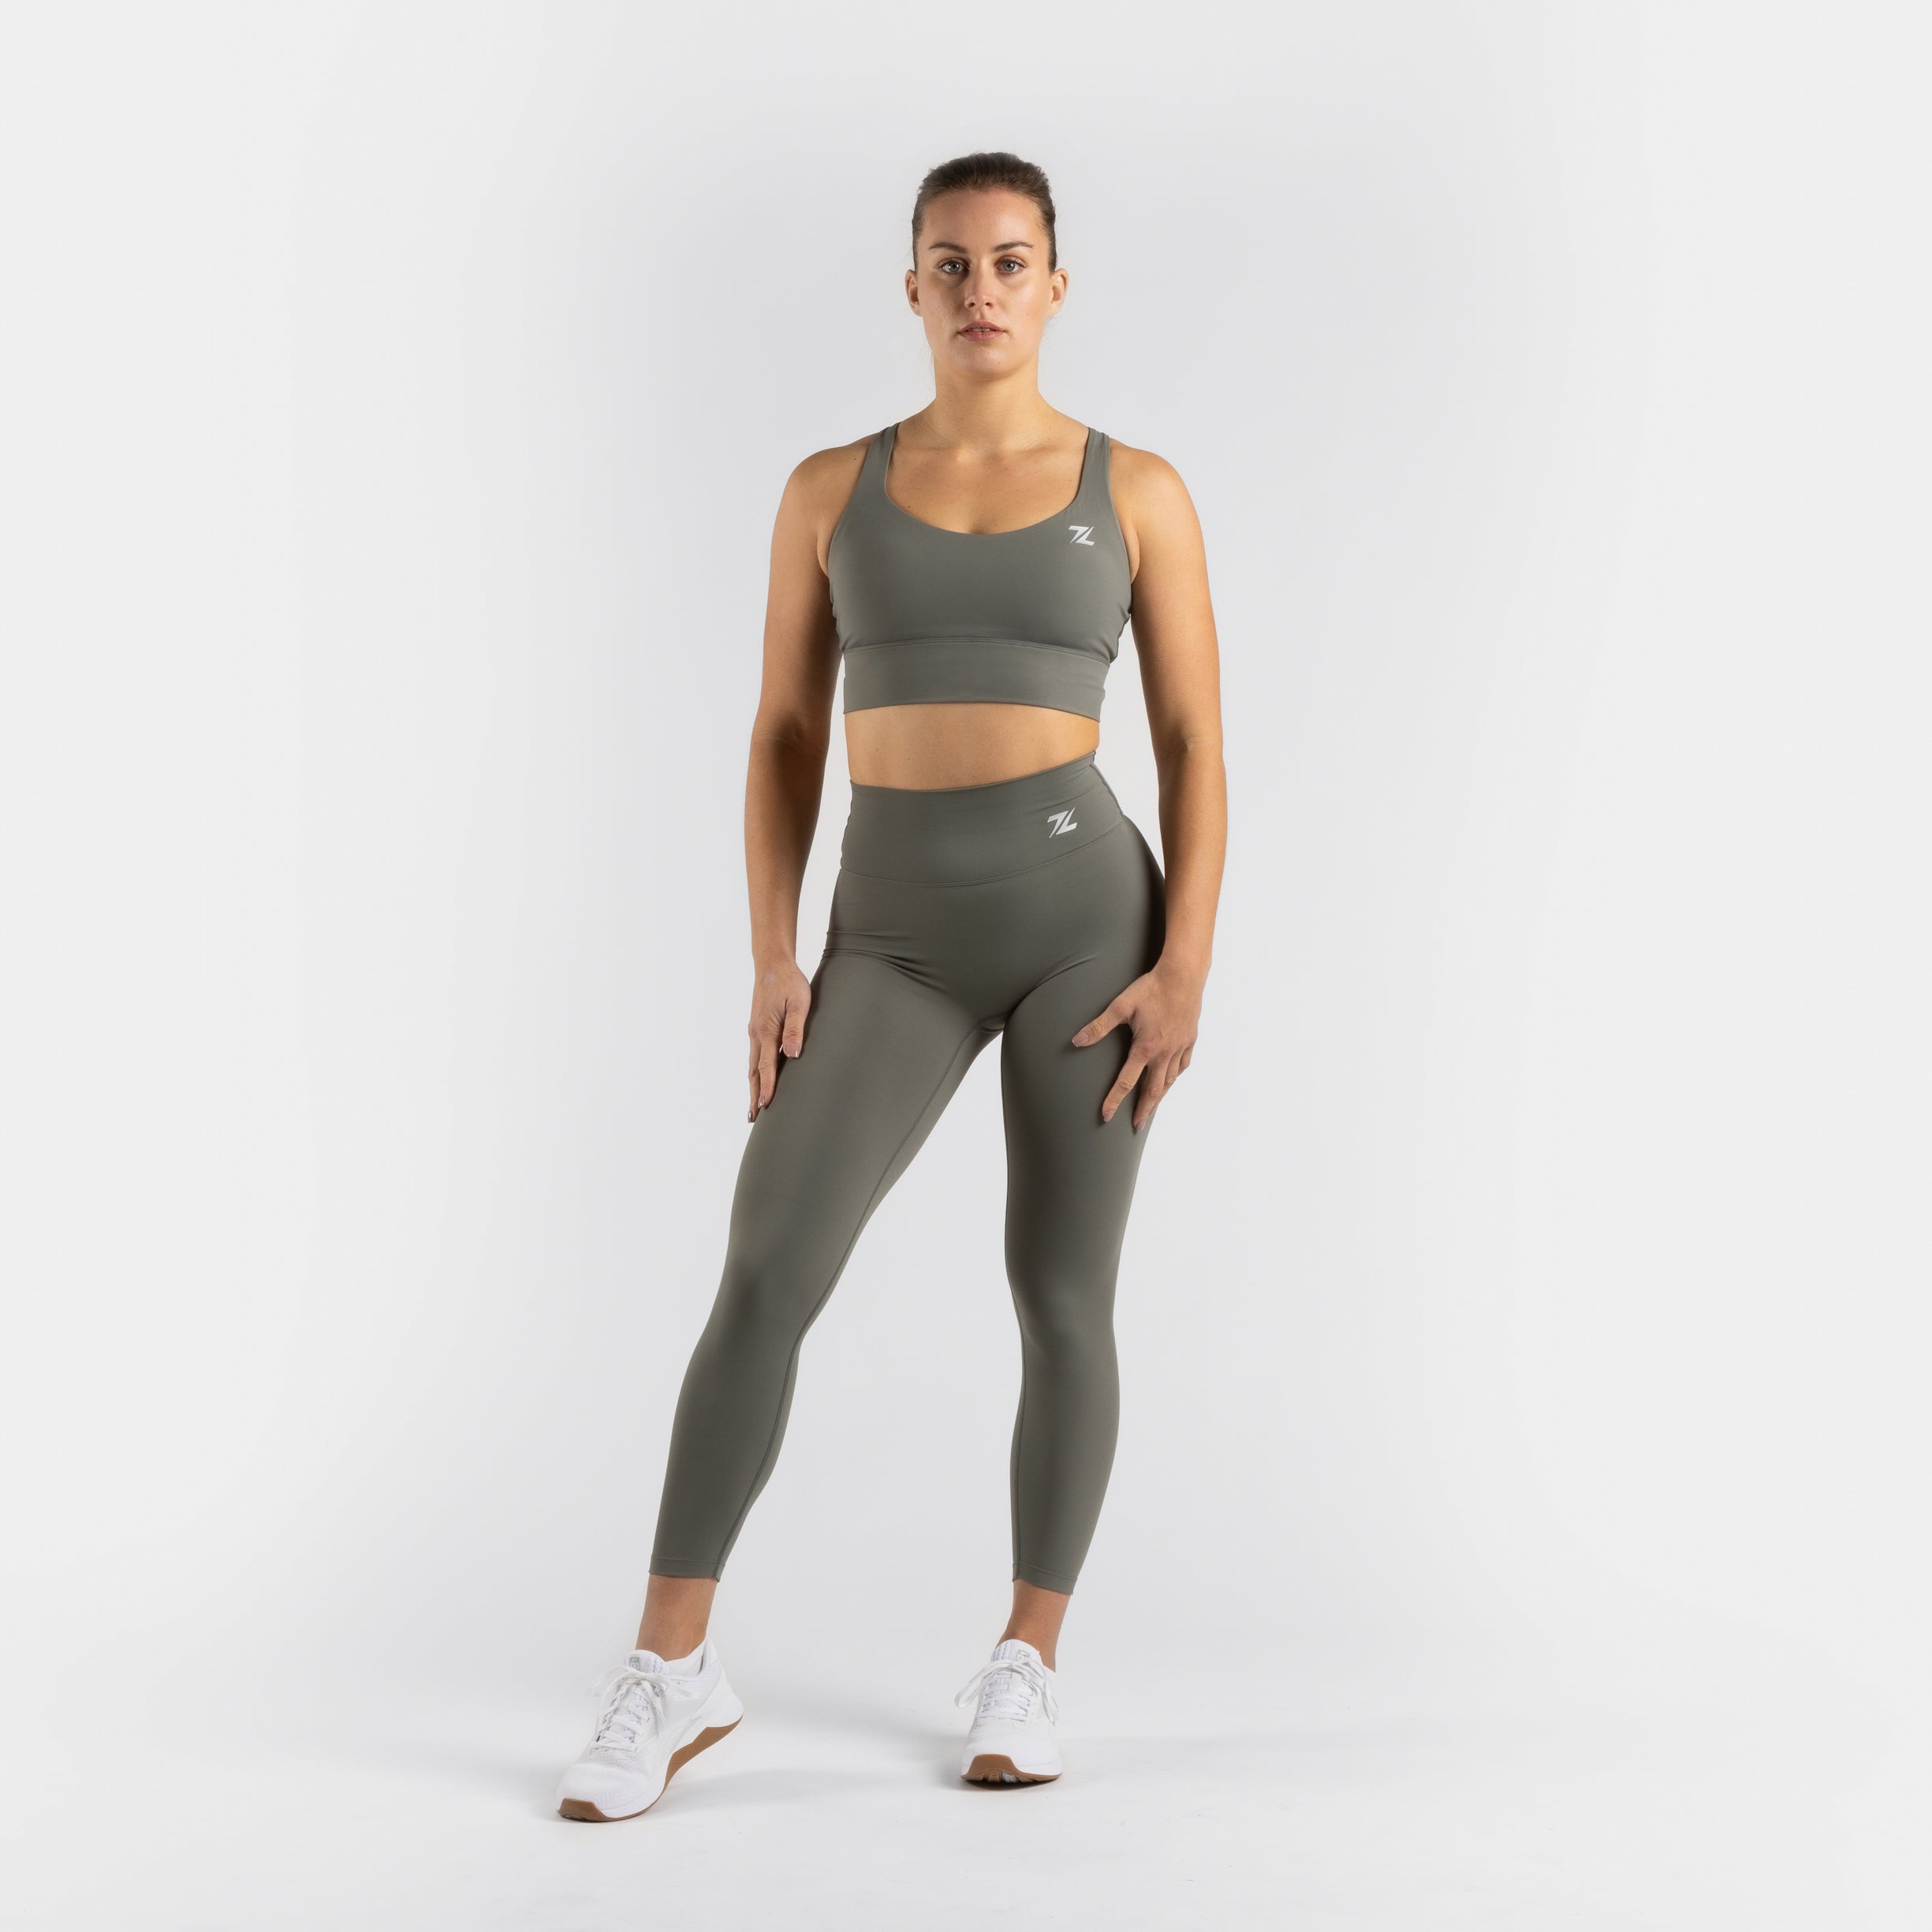 Stemz Fitness - Stemz Fitness custom Tikiboo leggings